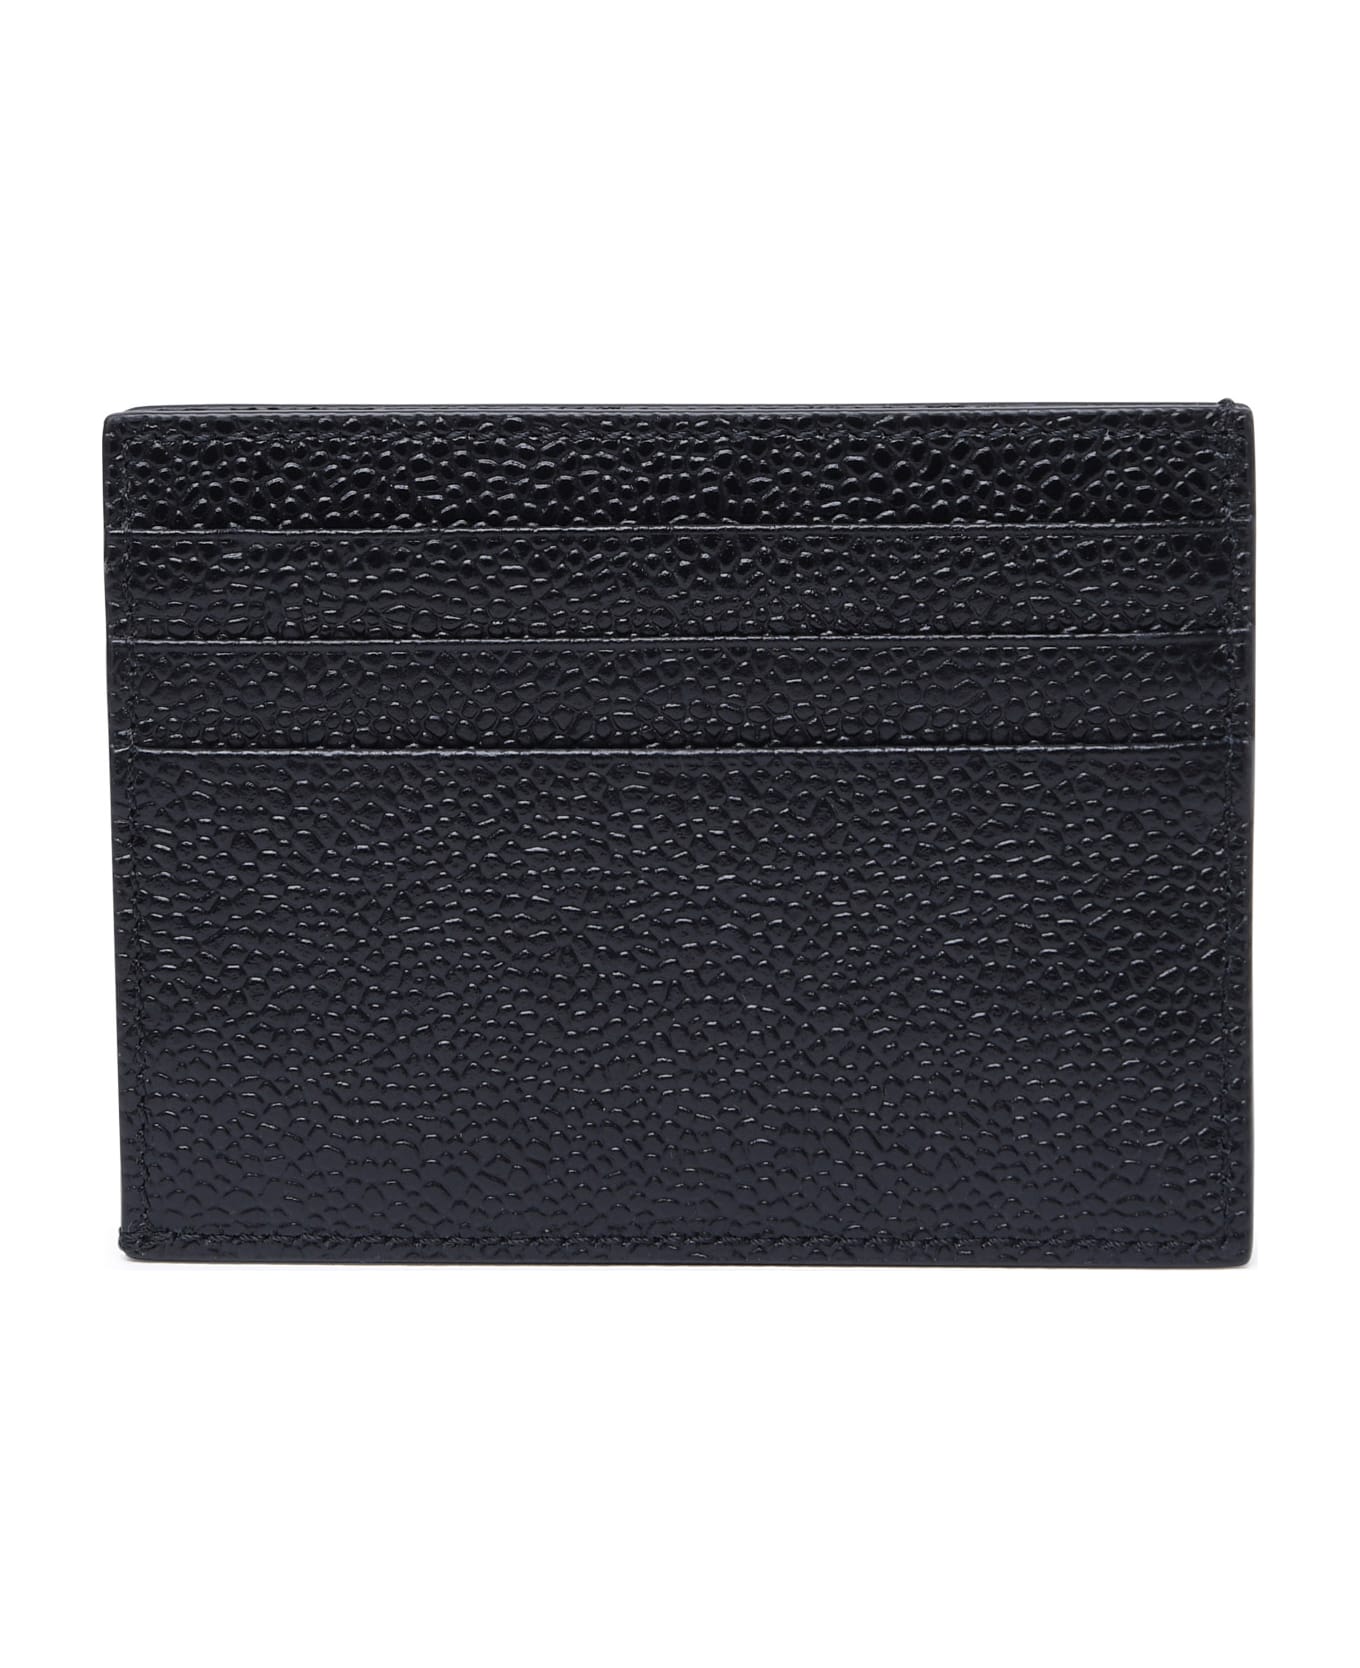 Thom Browne Black Leather Card Holder - Black